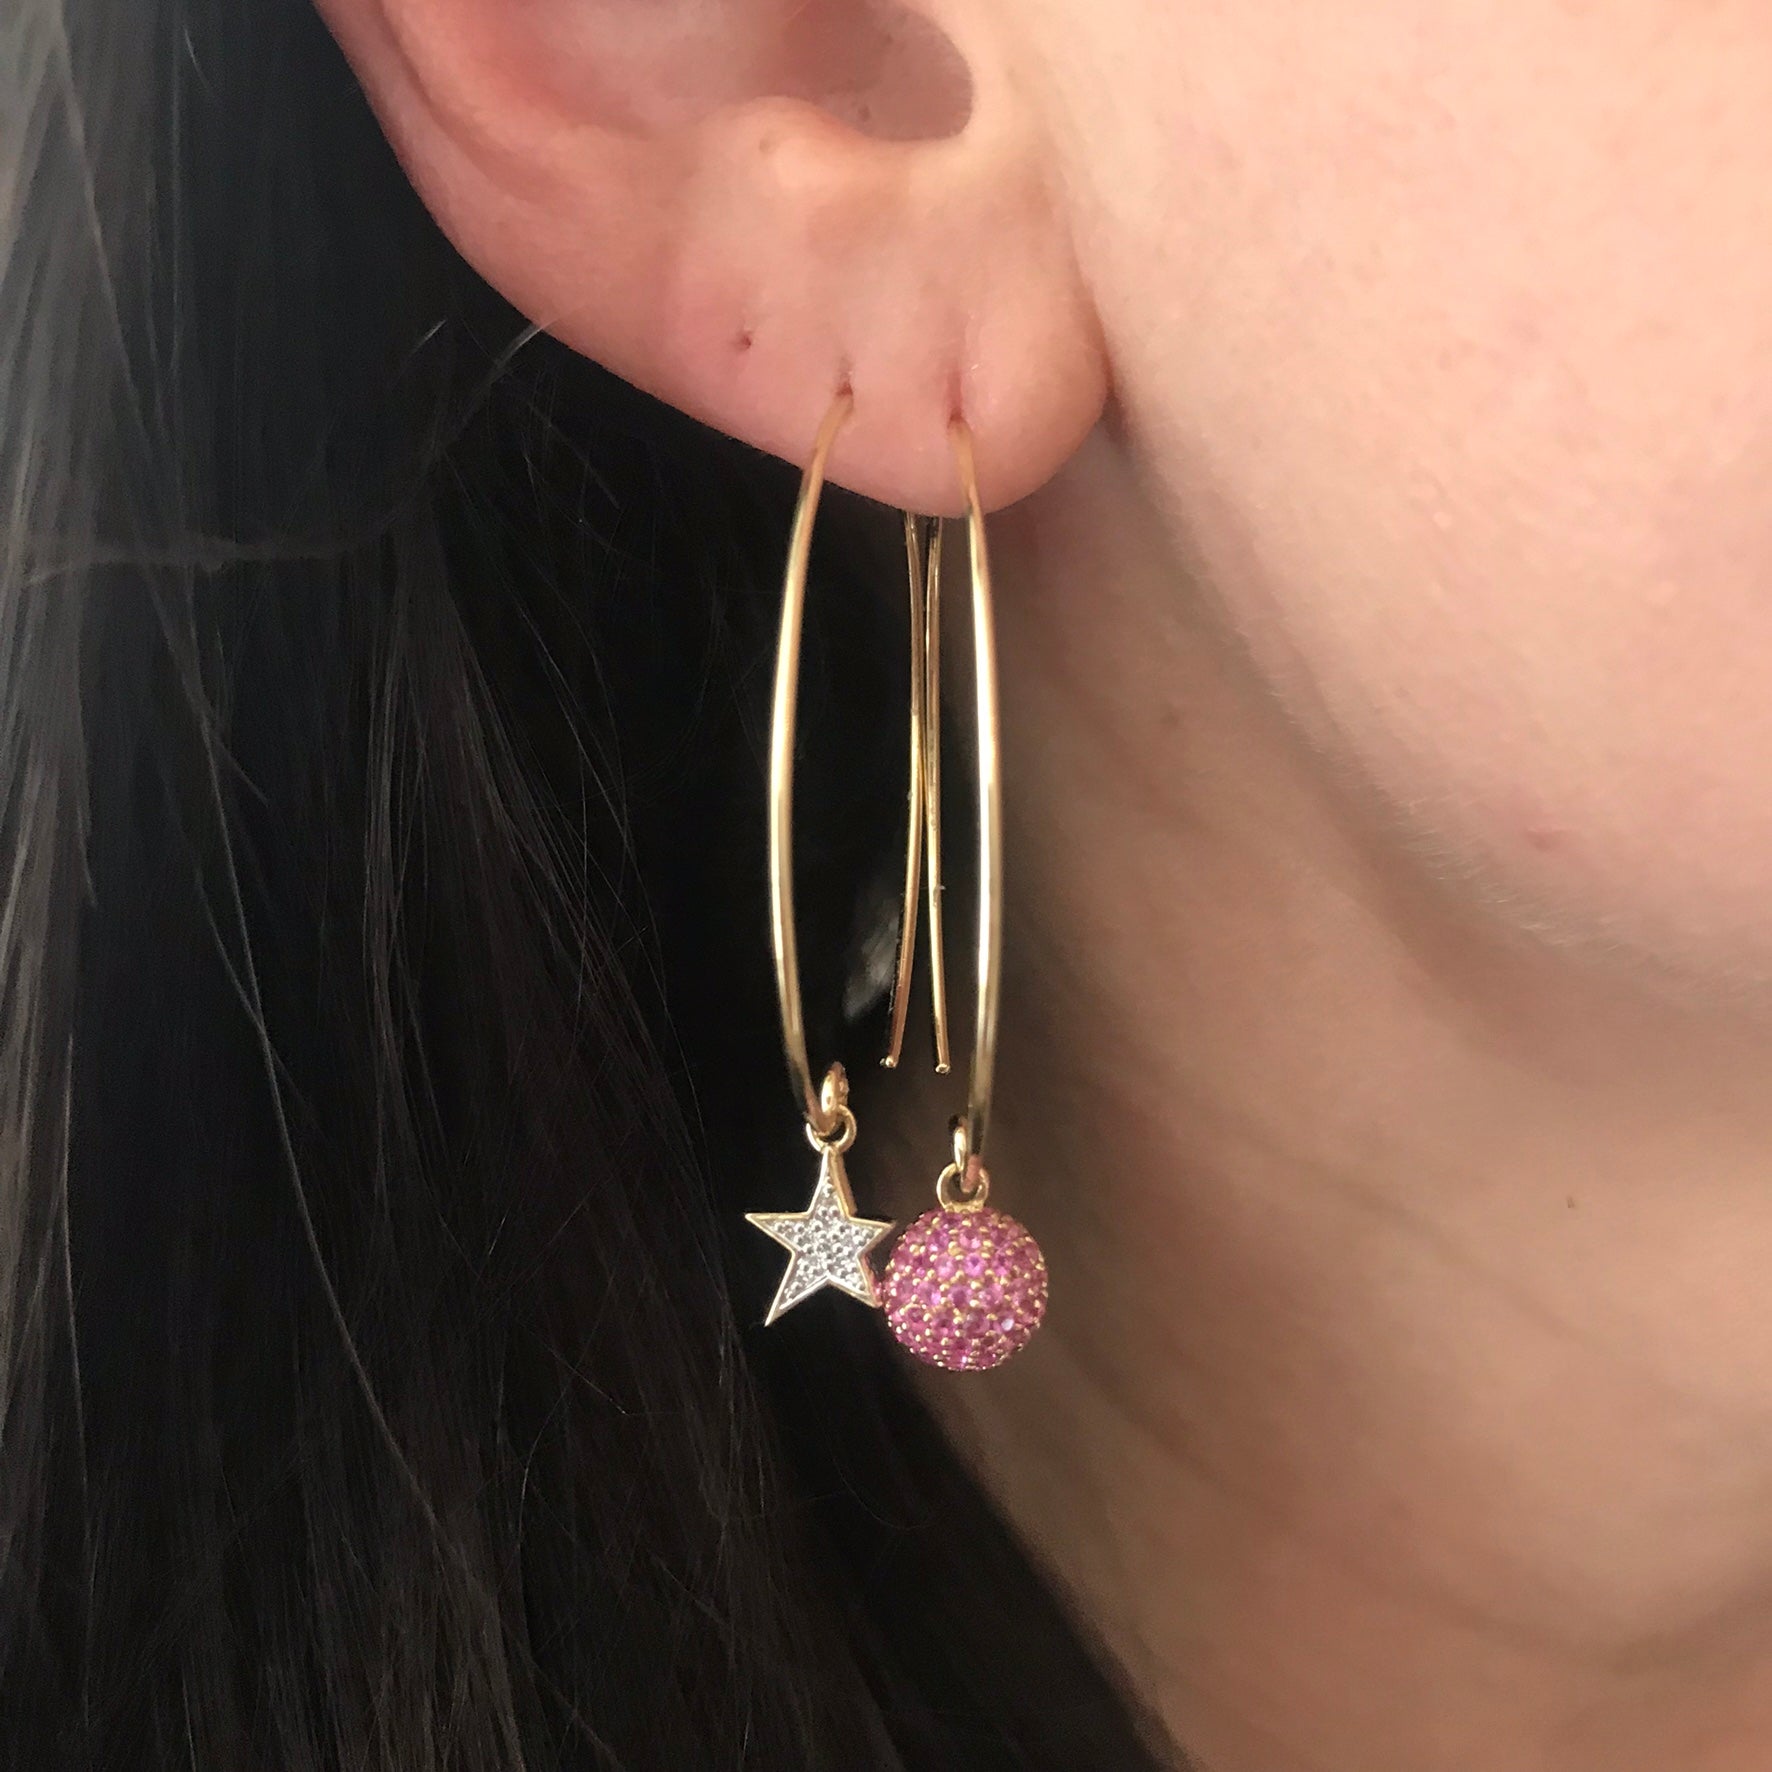 Dainty Bezel Set Pink Sapphire Chain Necklace – Milestones by Ashleigh  Bergman